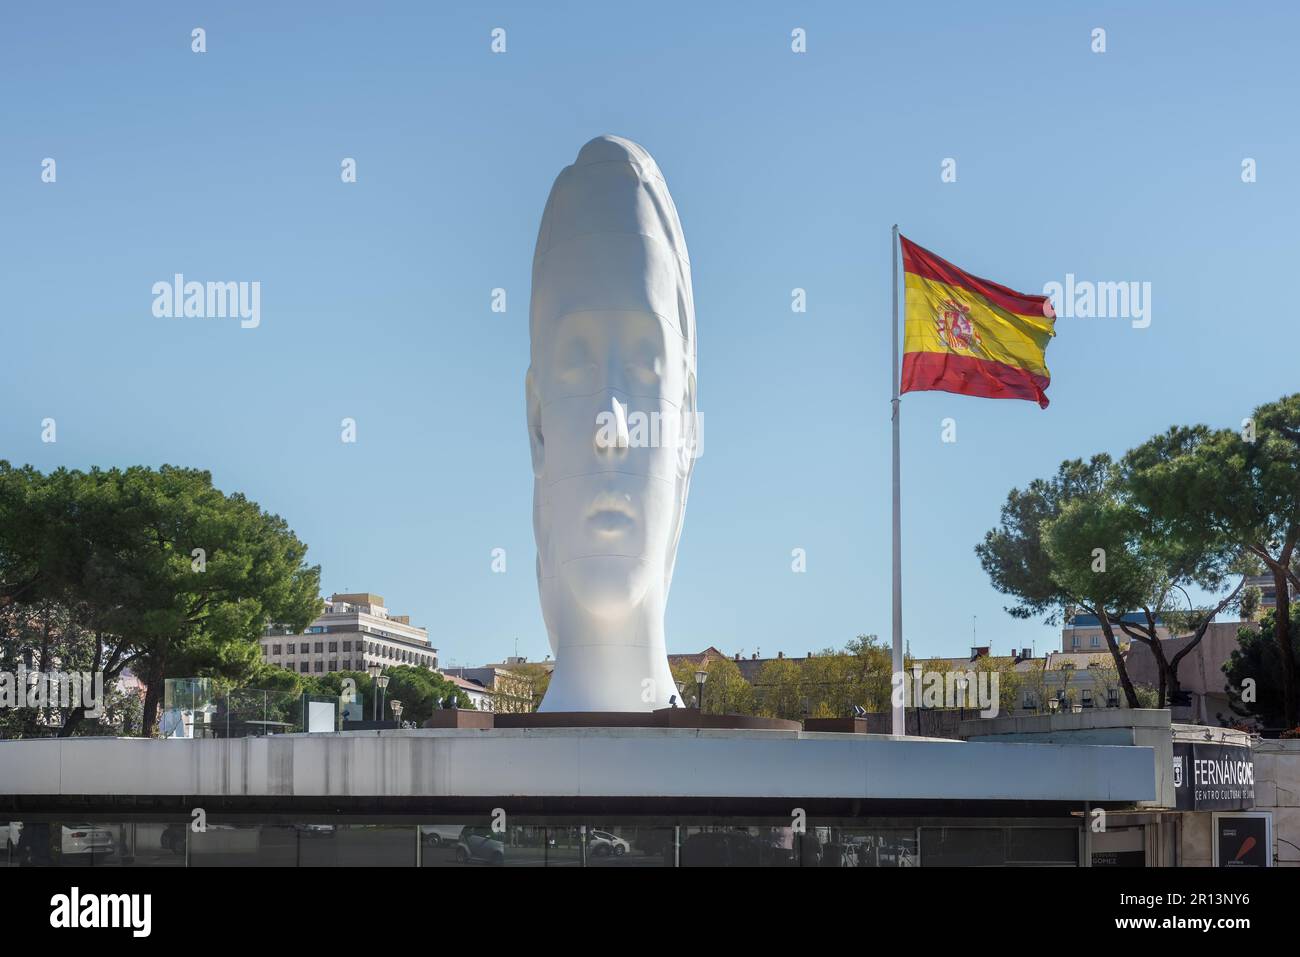 Fernan Gomez Centro Cultural de la Villa with Julia Sculpture by Jaume Plensa, 2018 - Madrid, Spain Stock Photo